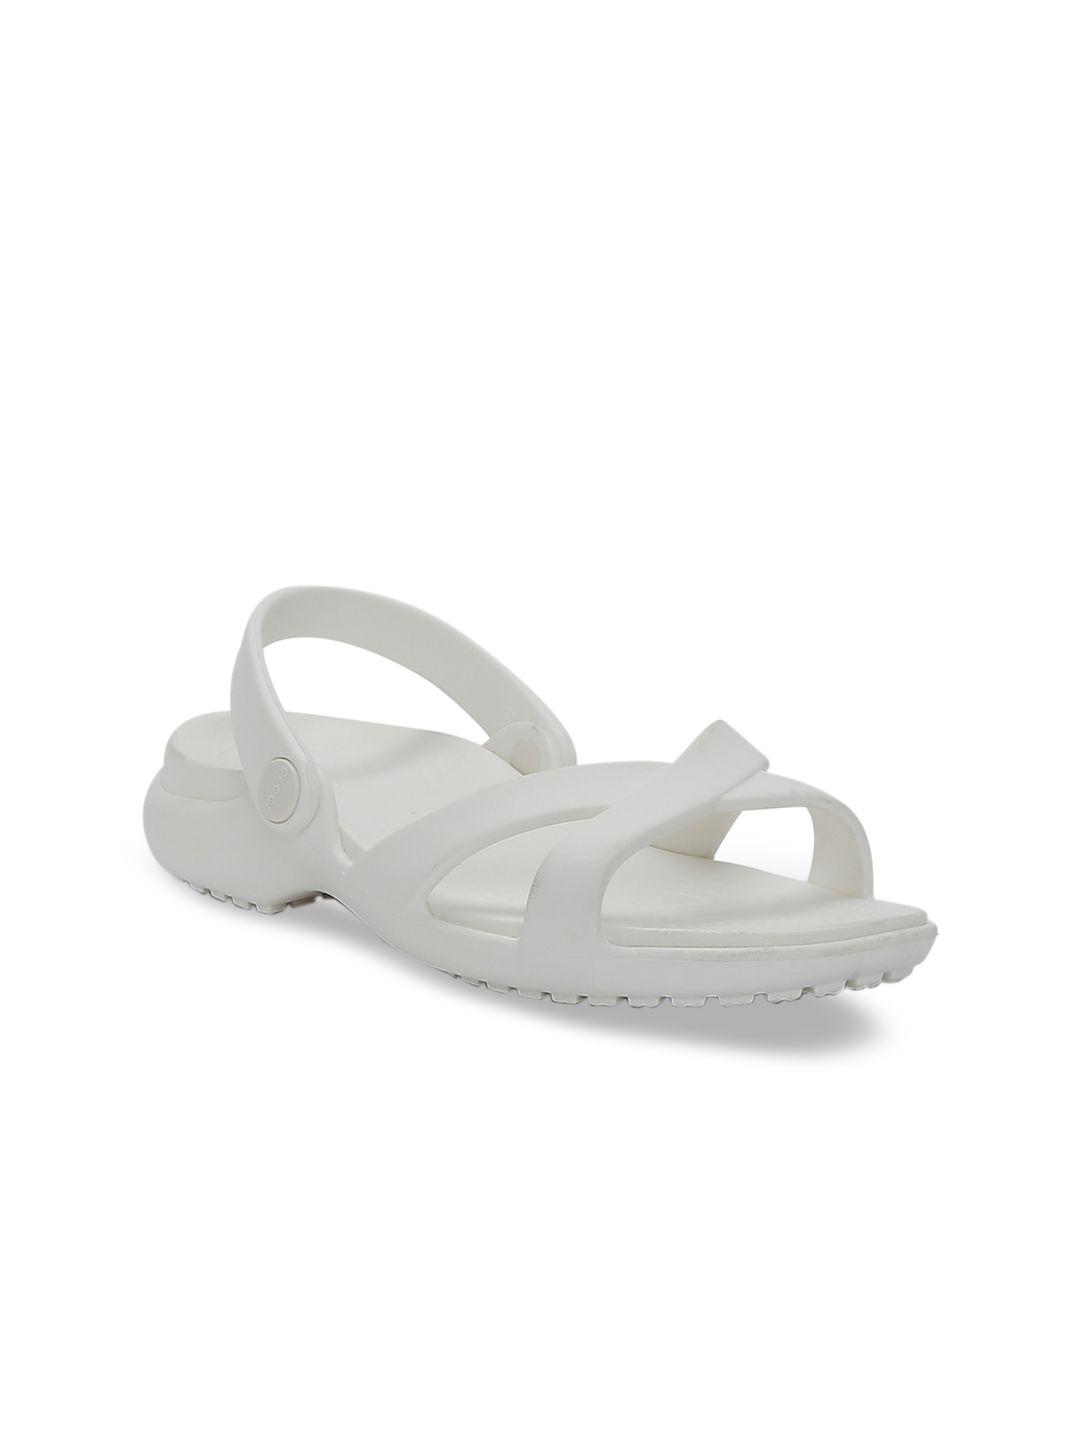 crocs meleen  women off-white solid open toe flats